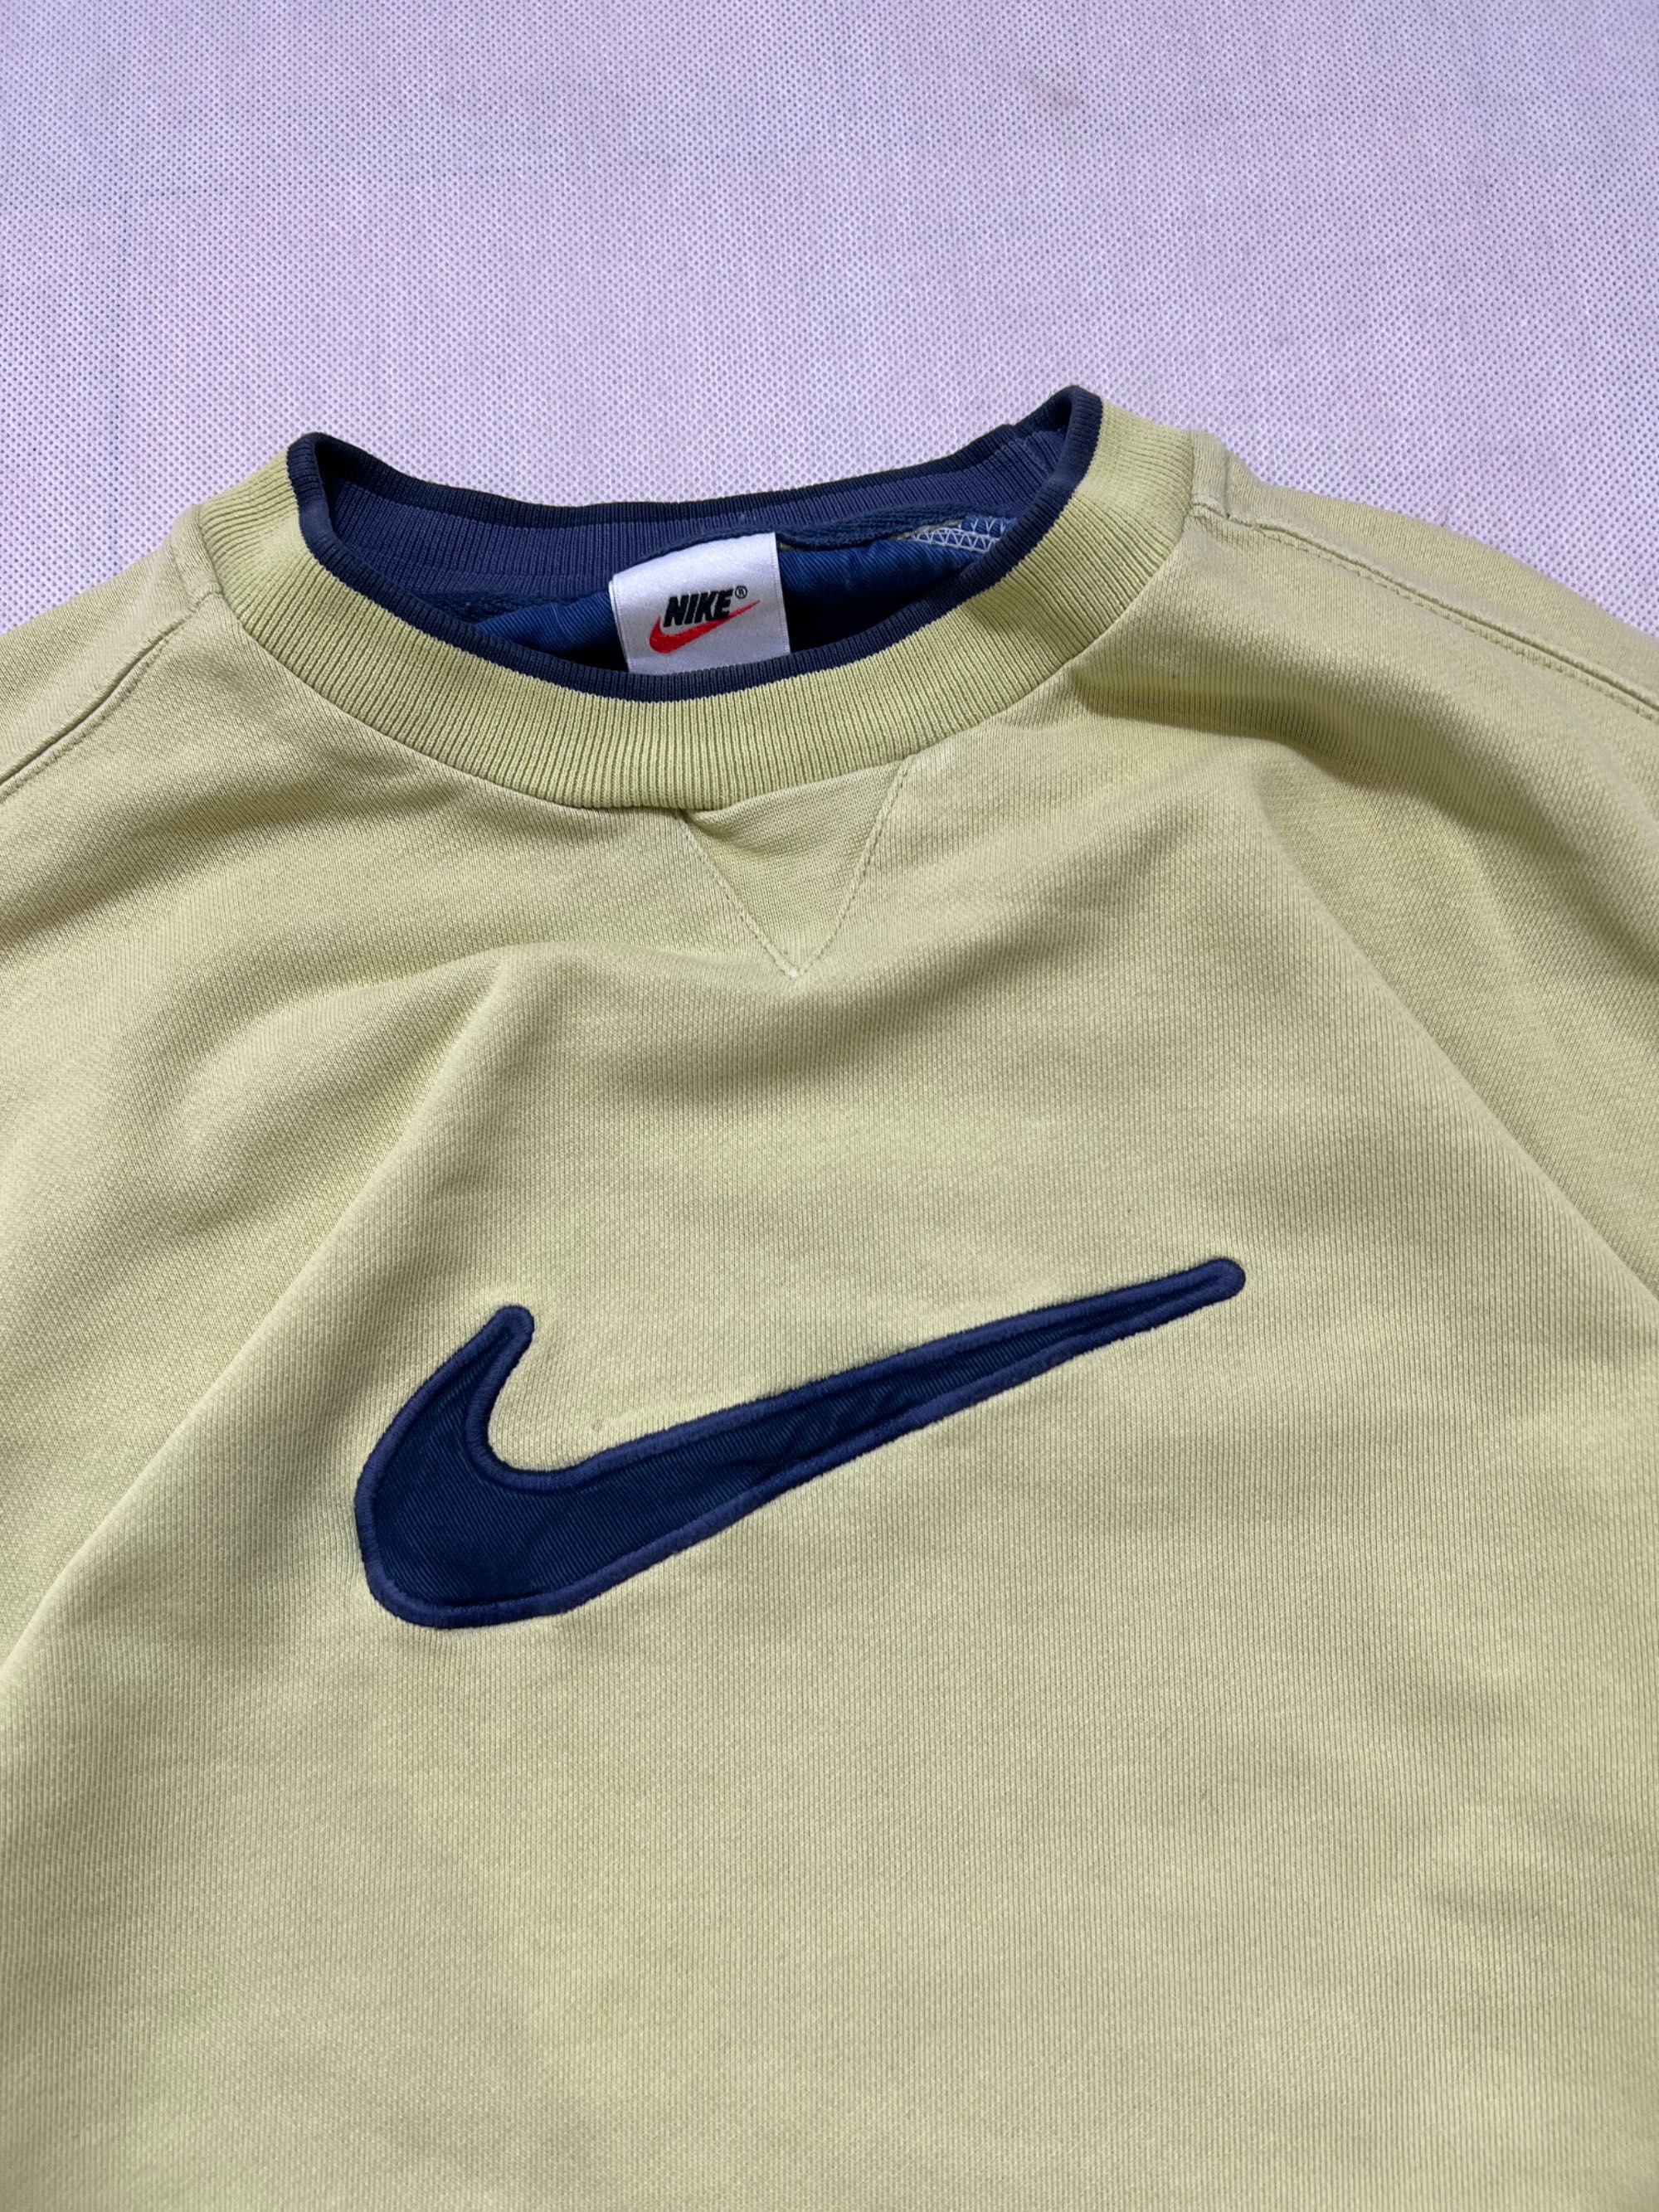 Bluza Nike big swoosh vintage 90’s great color